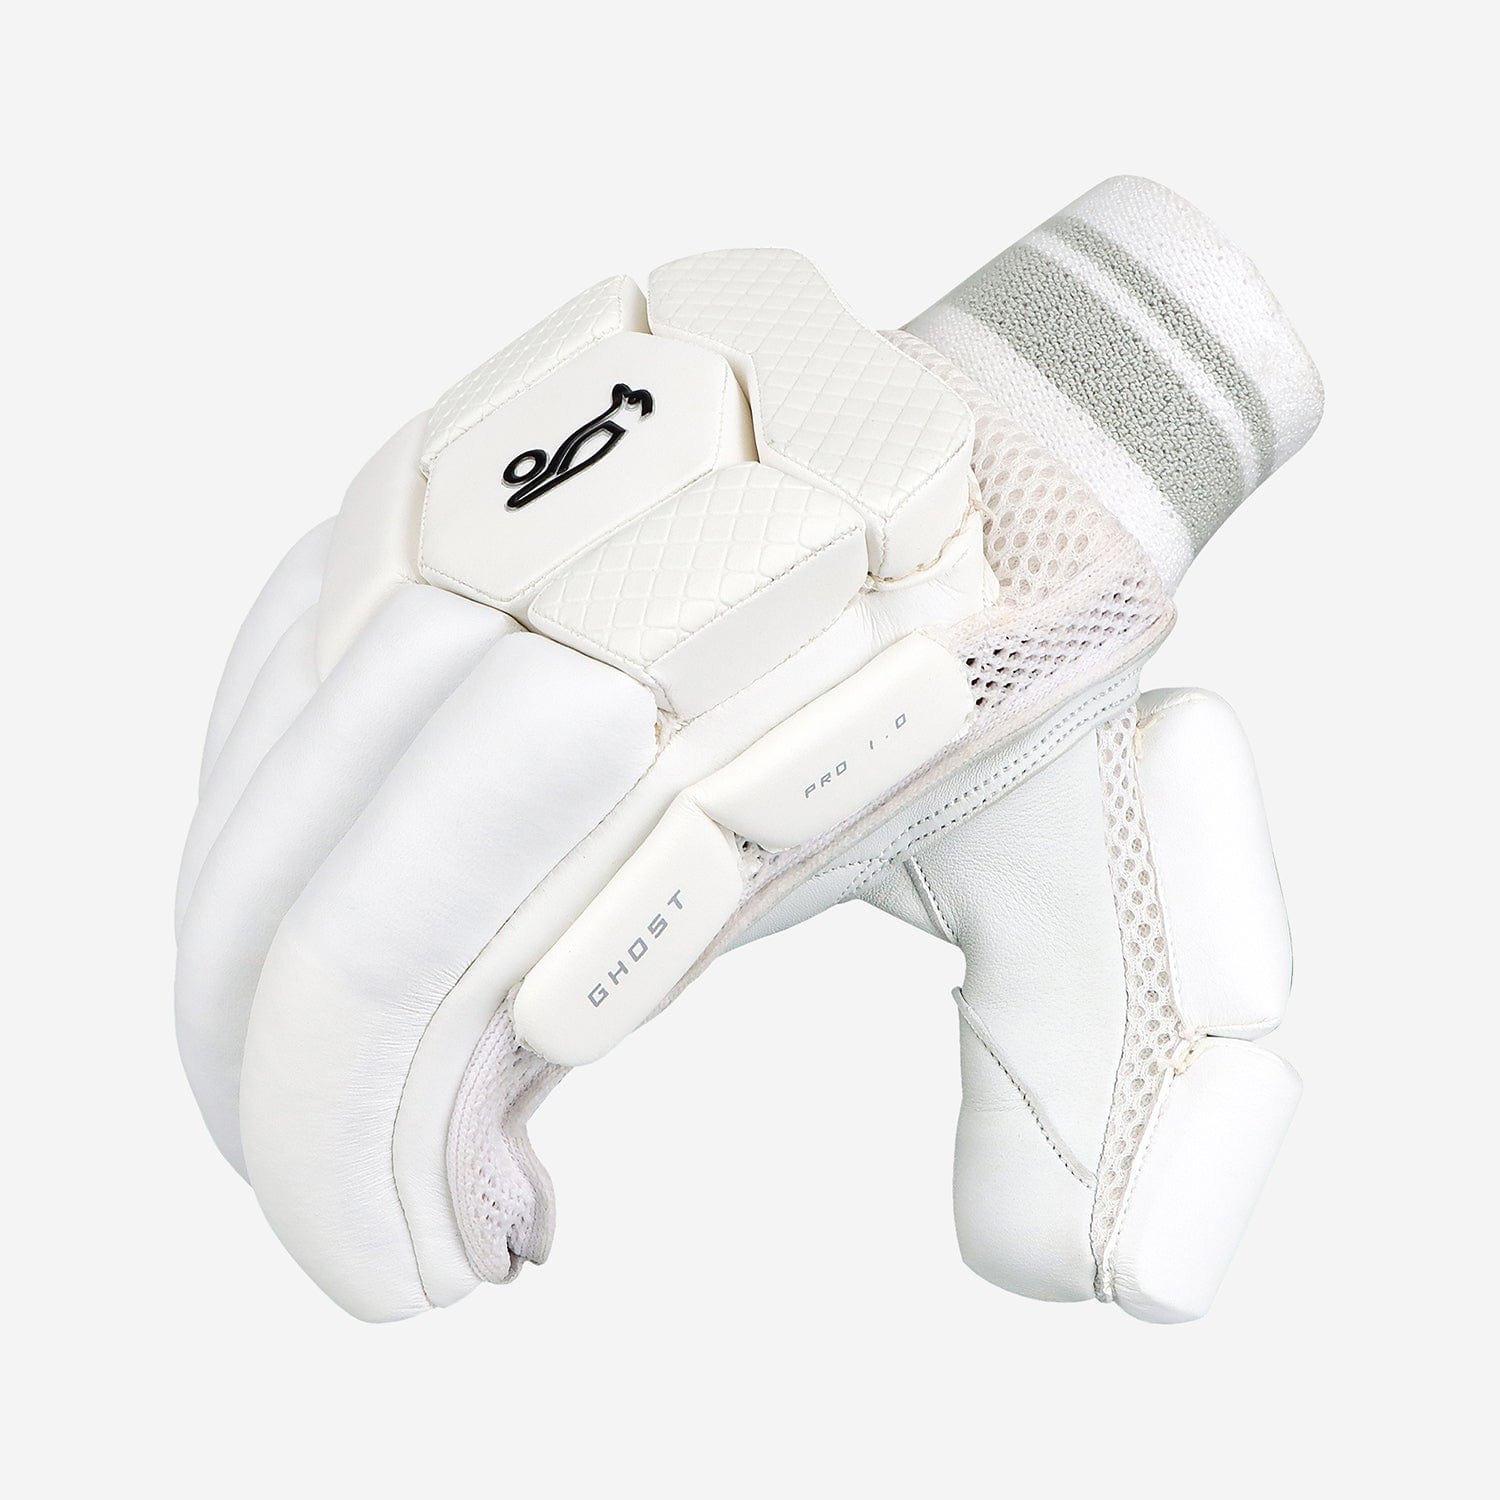 Kookaburra Cricket Batting Adult / Right Kookaburra Ghost Pro 1.0 Adult Cricket Batting Gloves